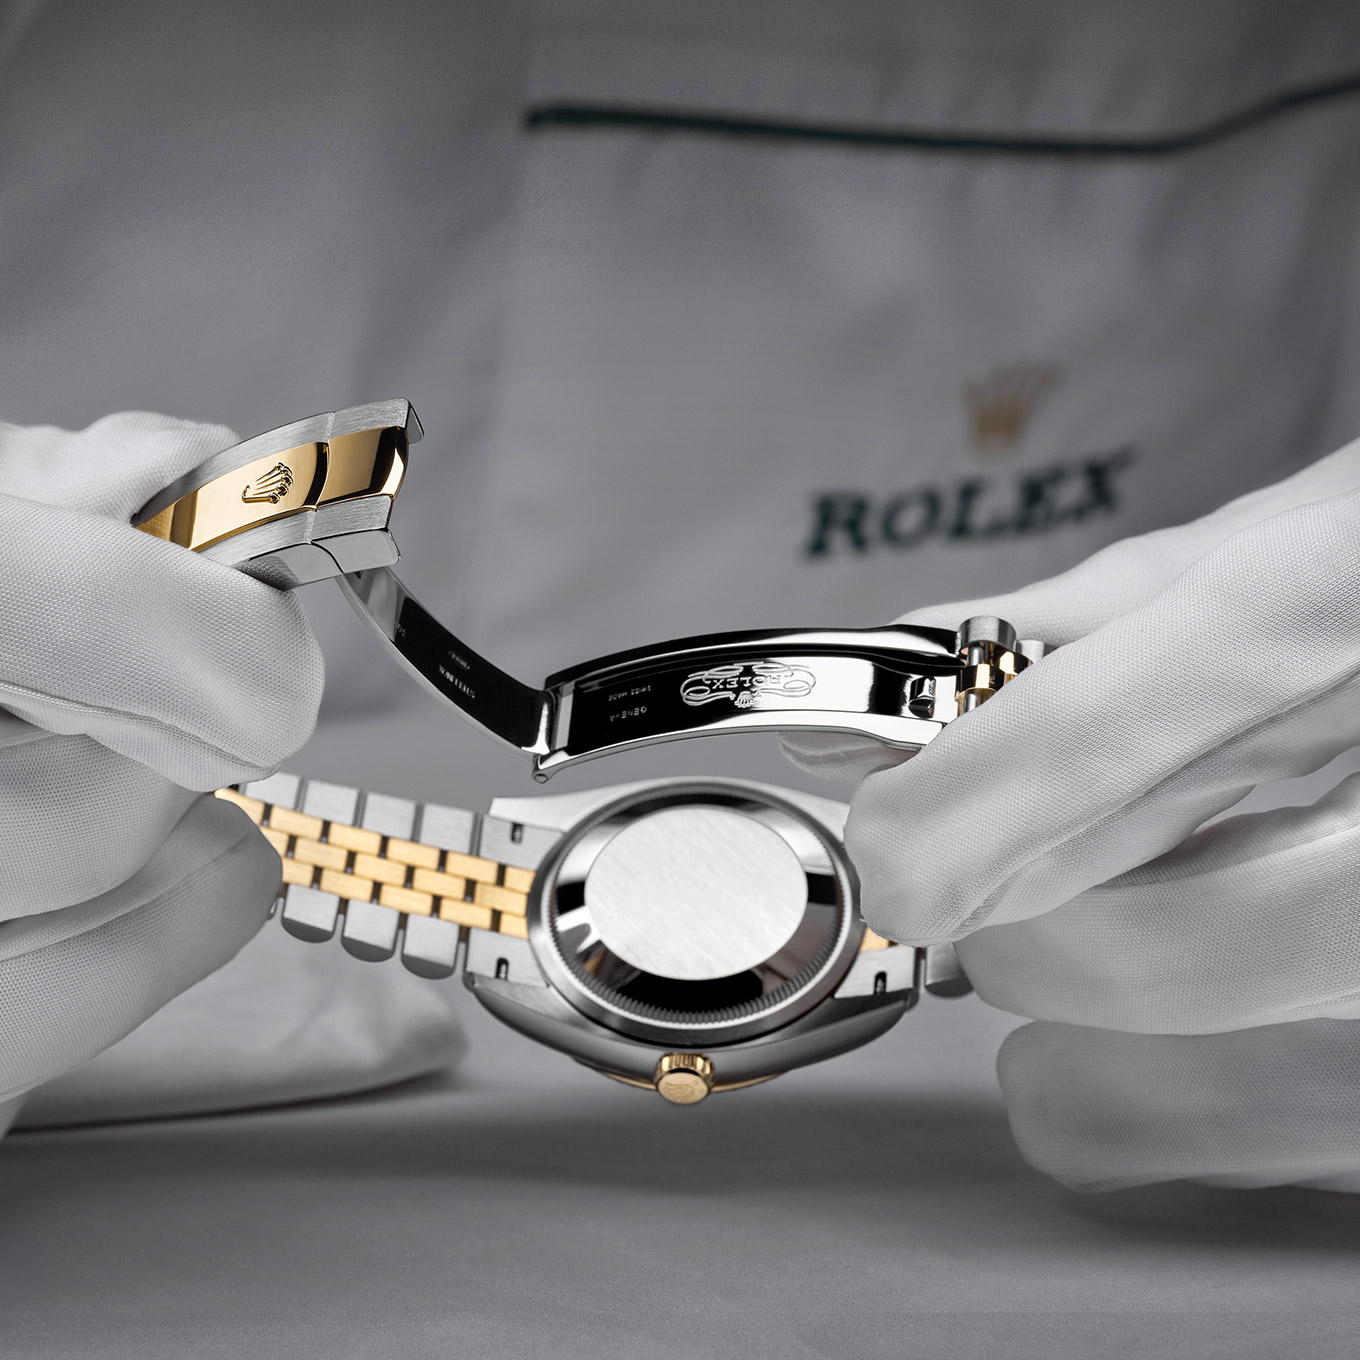 Rolex servicing at OC Tanner Jewelers in Salt Lake City, UT